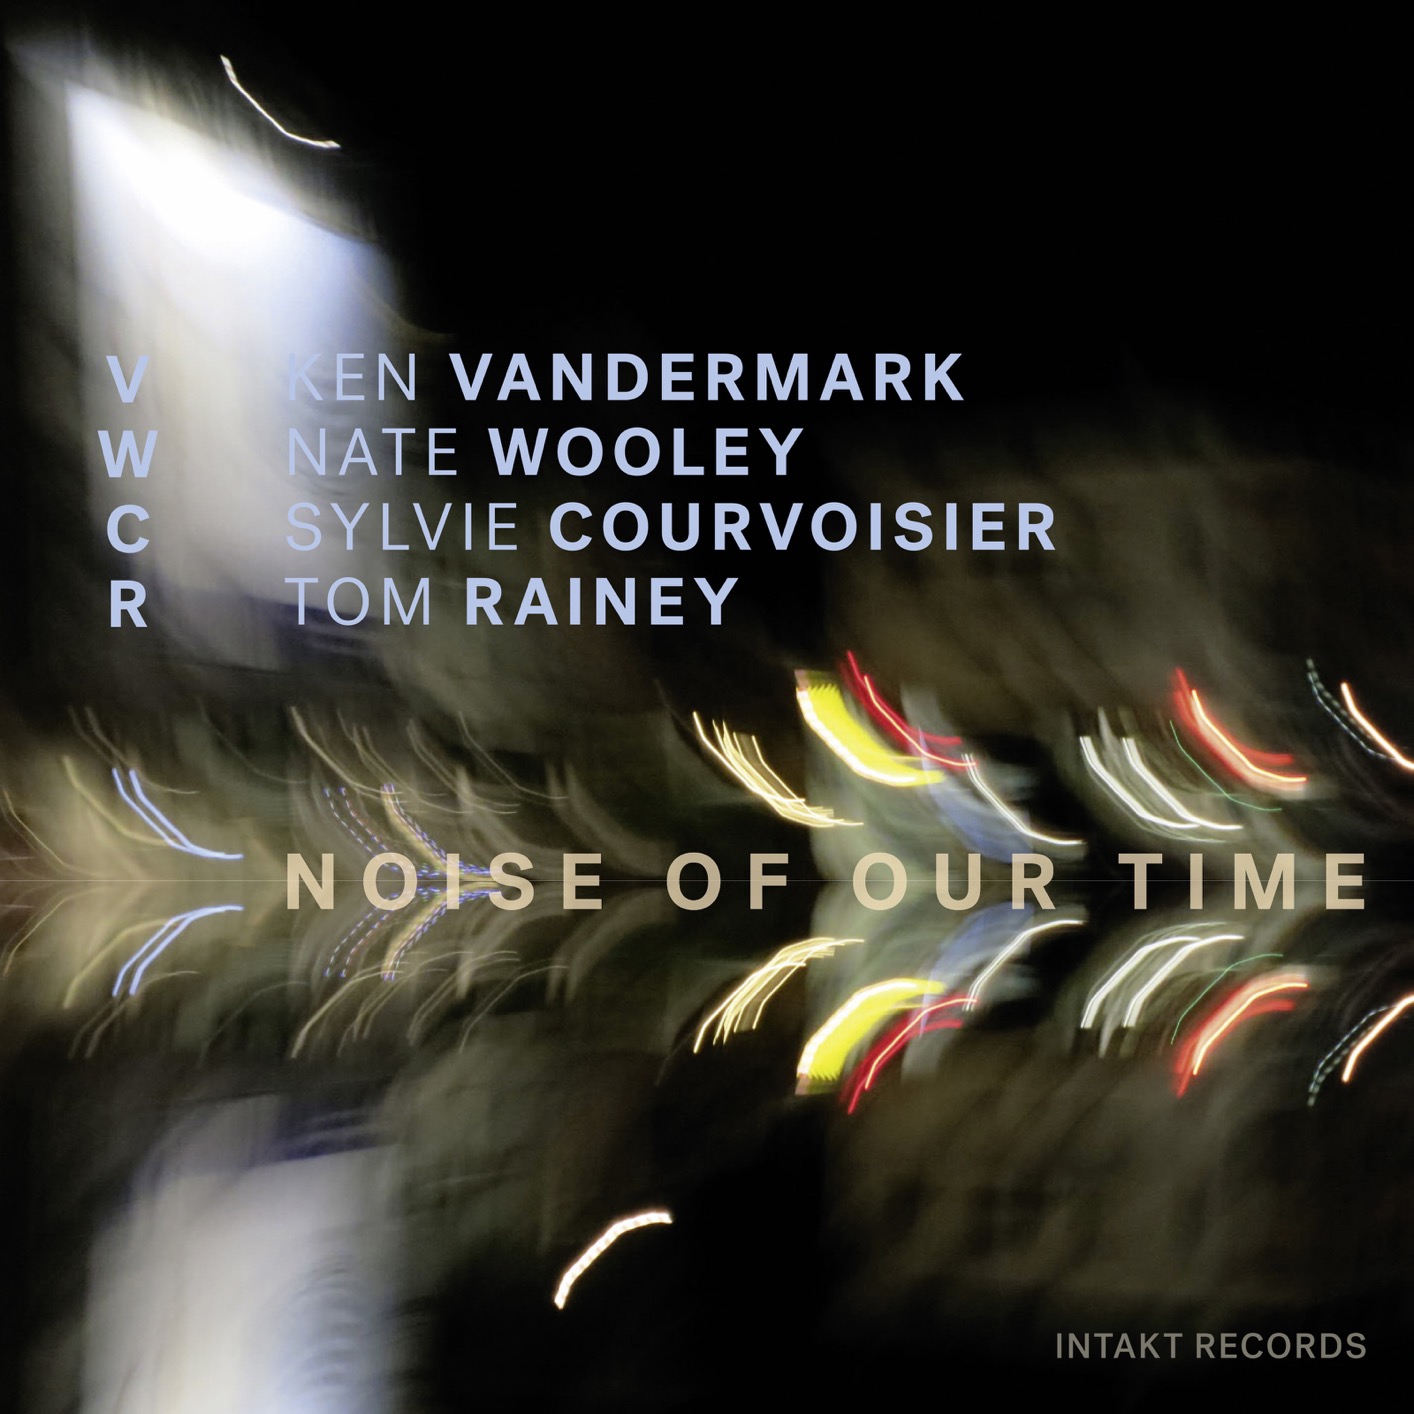 VWCR: Ken Vandermark, Nate Wooley, Sylvie Courvoisier, Tom Rainey – Noise of Our Time (2018) [FLAC 24bit/96kHz]